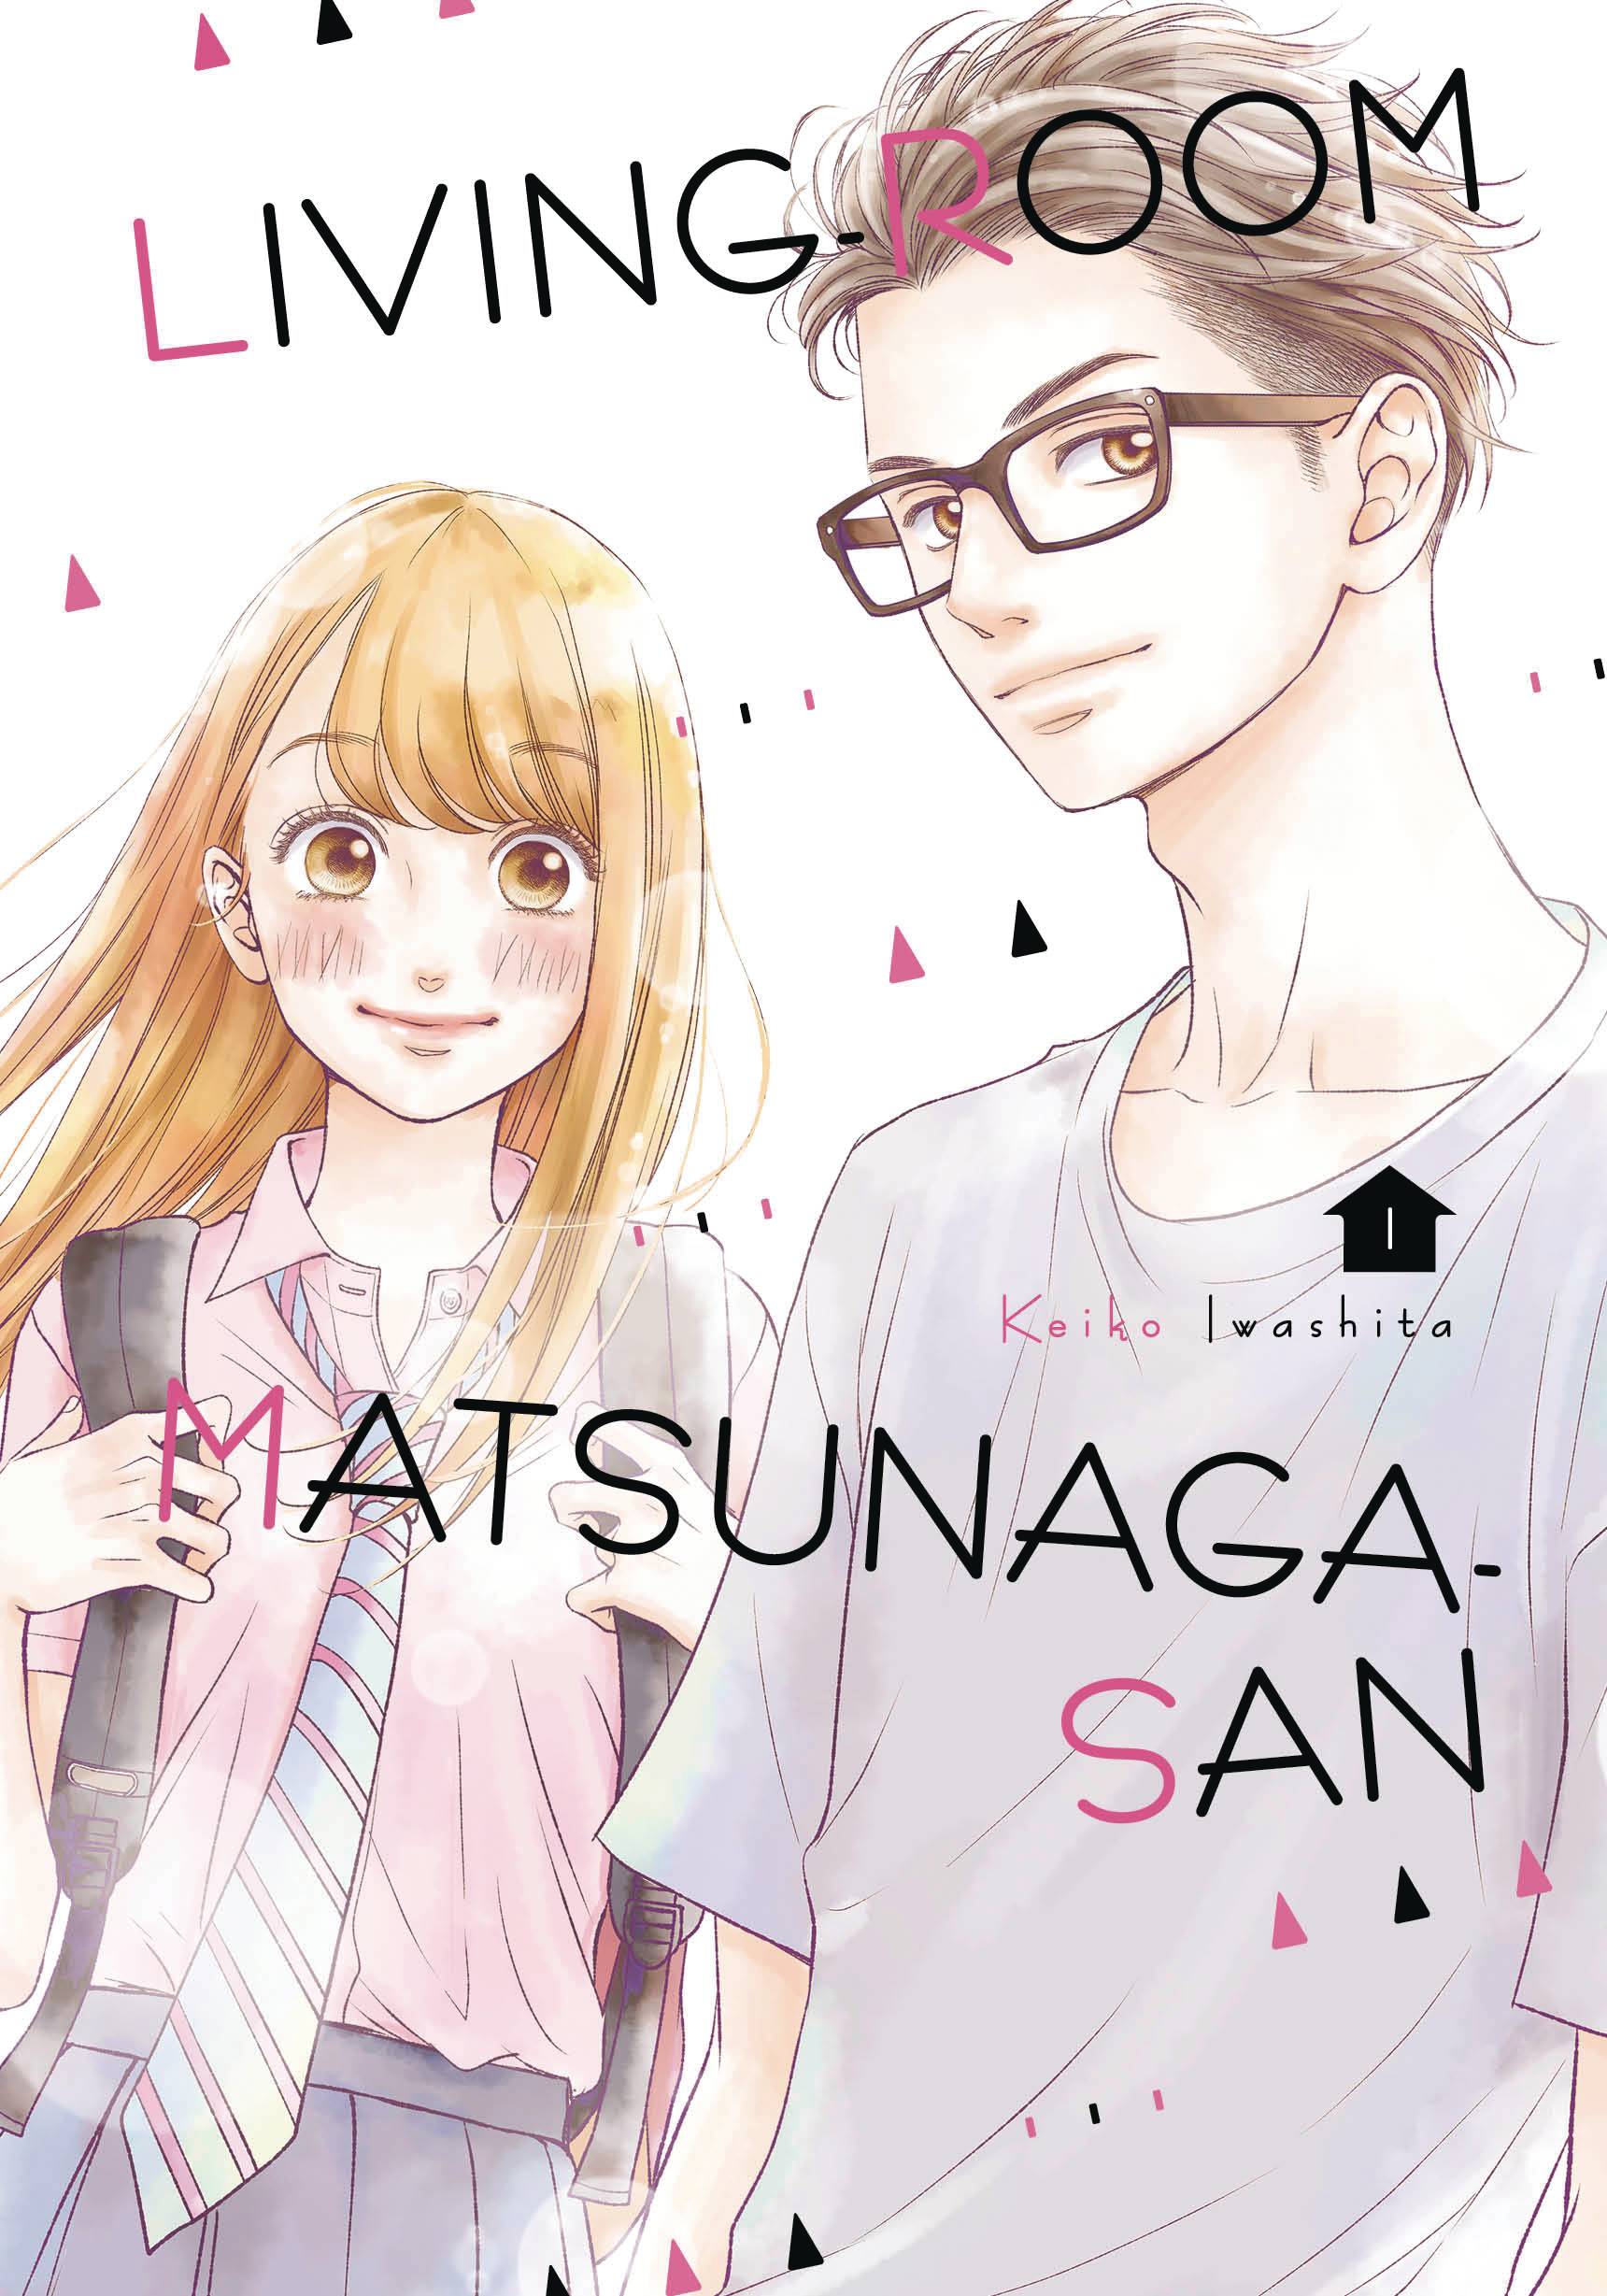 Living Room Matsunaga San Manga Volume 1